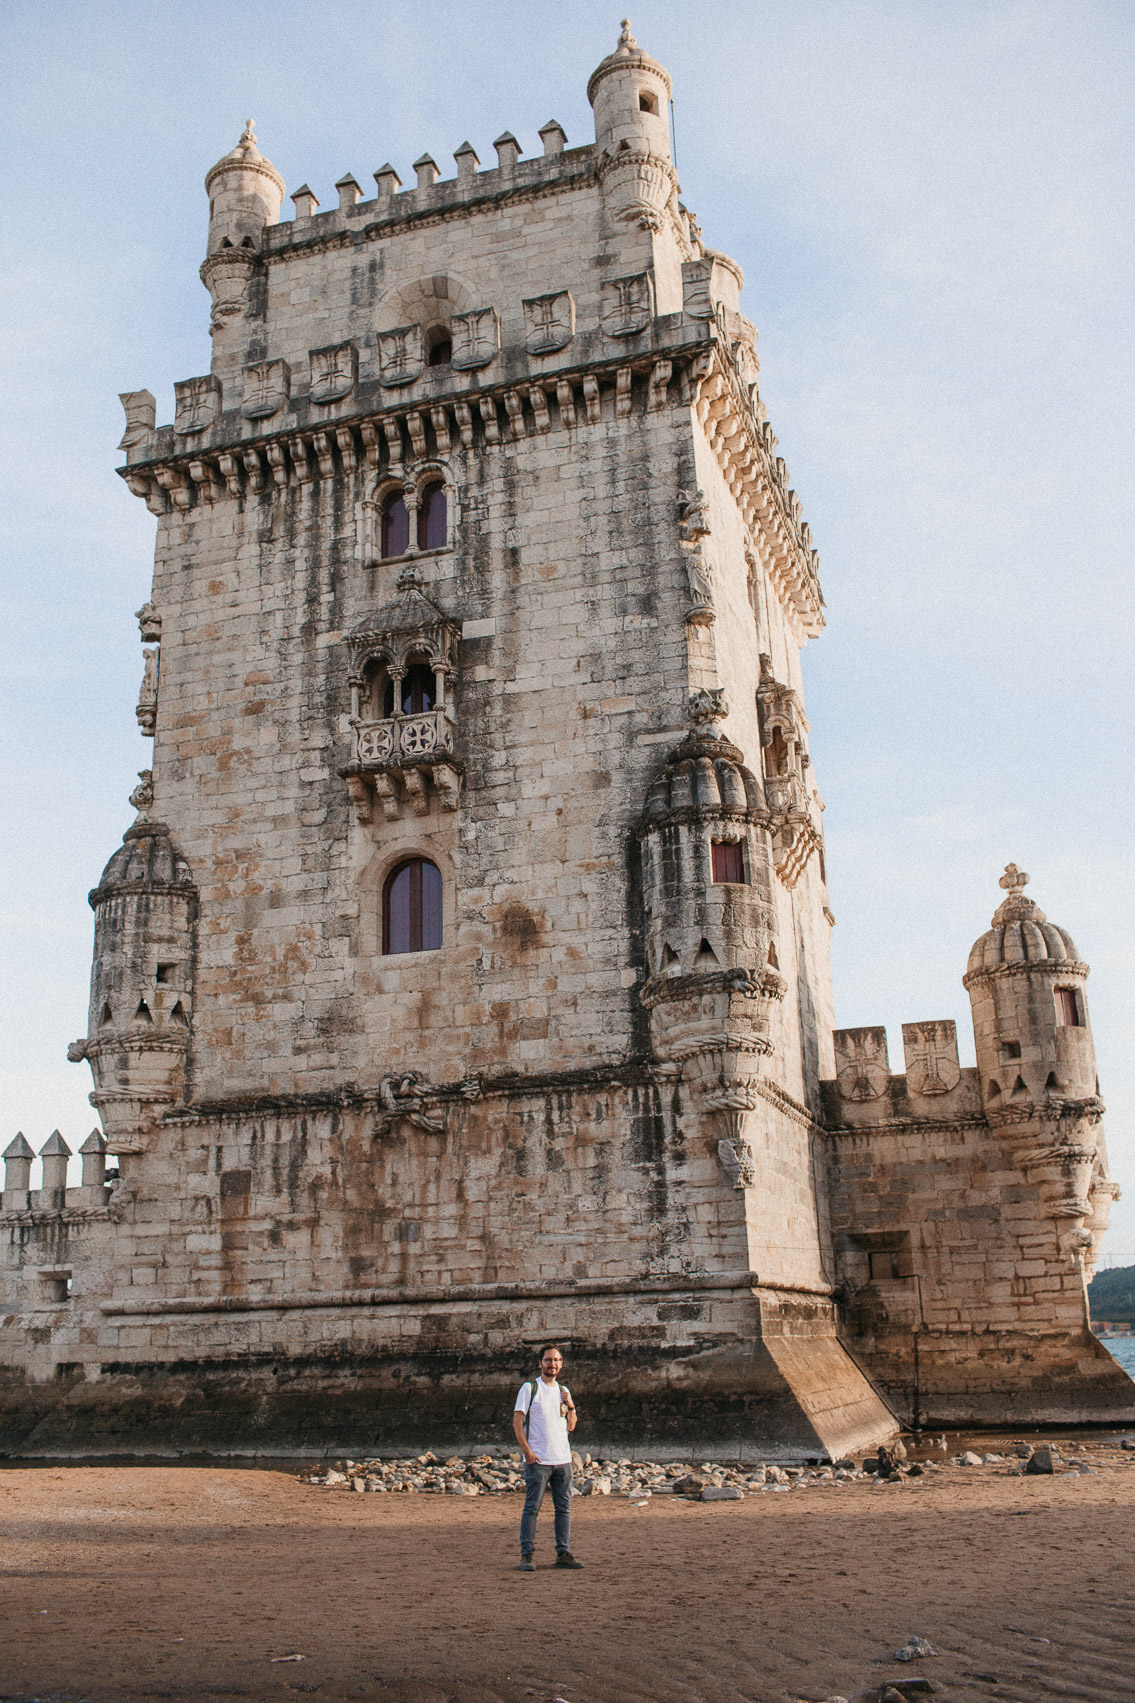 Torre de Belém - The cat, you and us